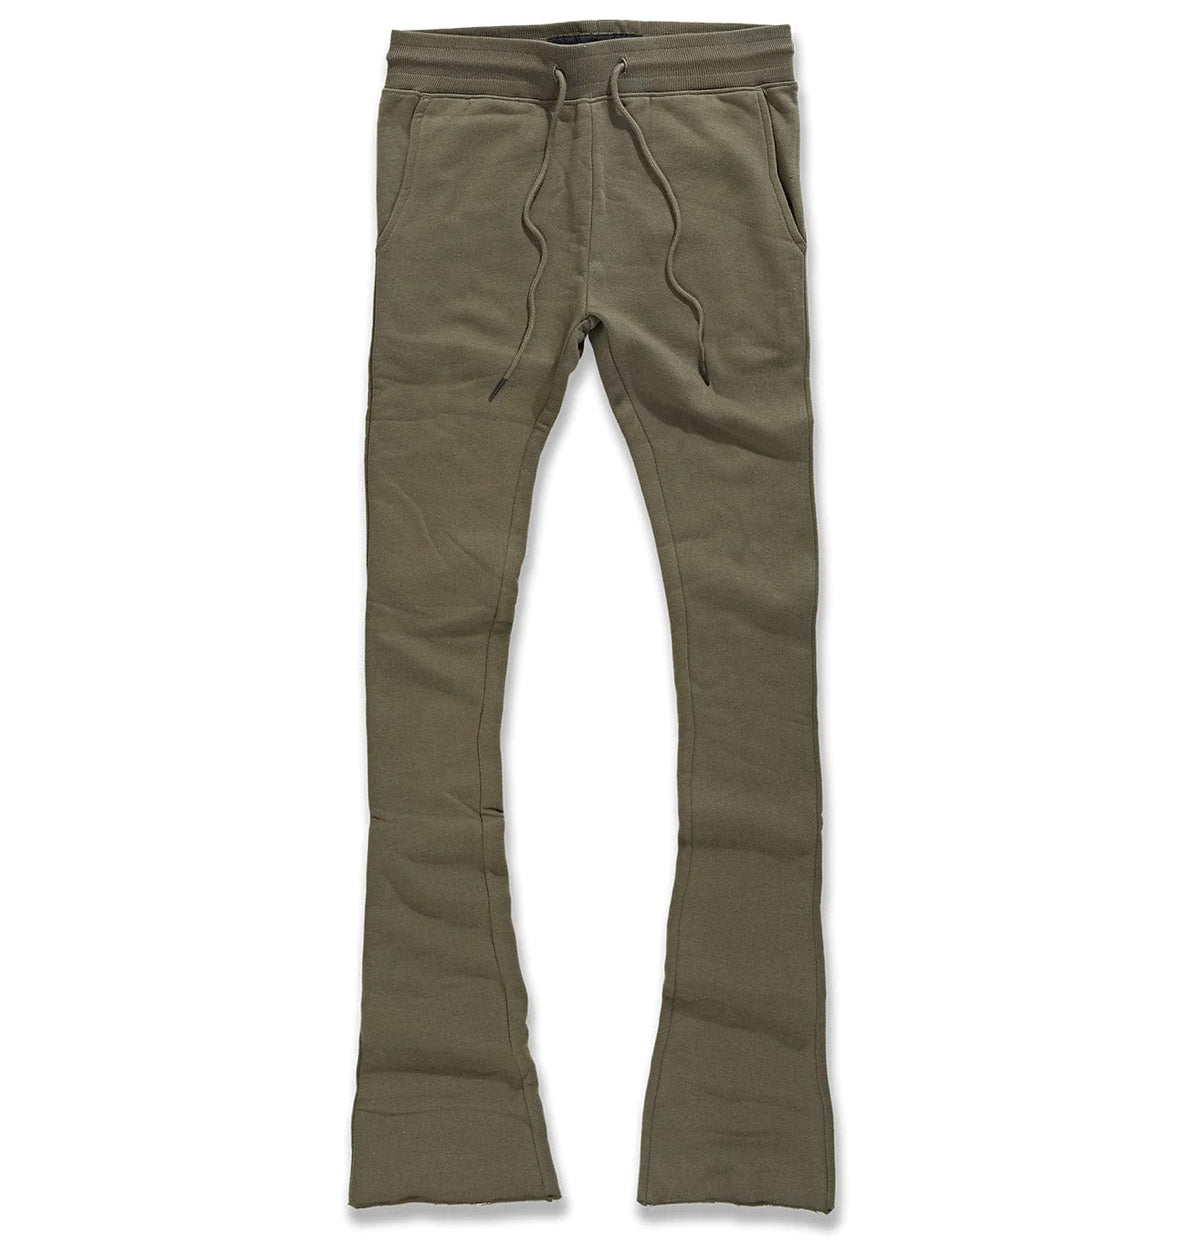 Jordan craig long stack fleece pants Olive  8826l